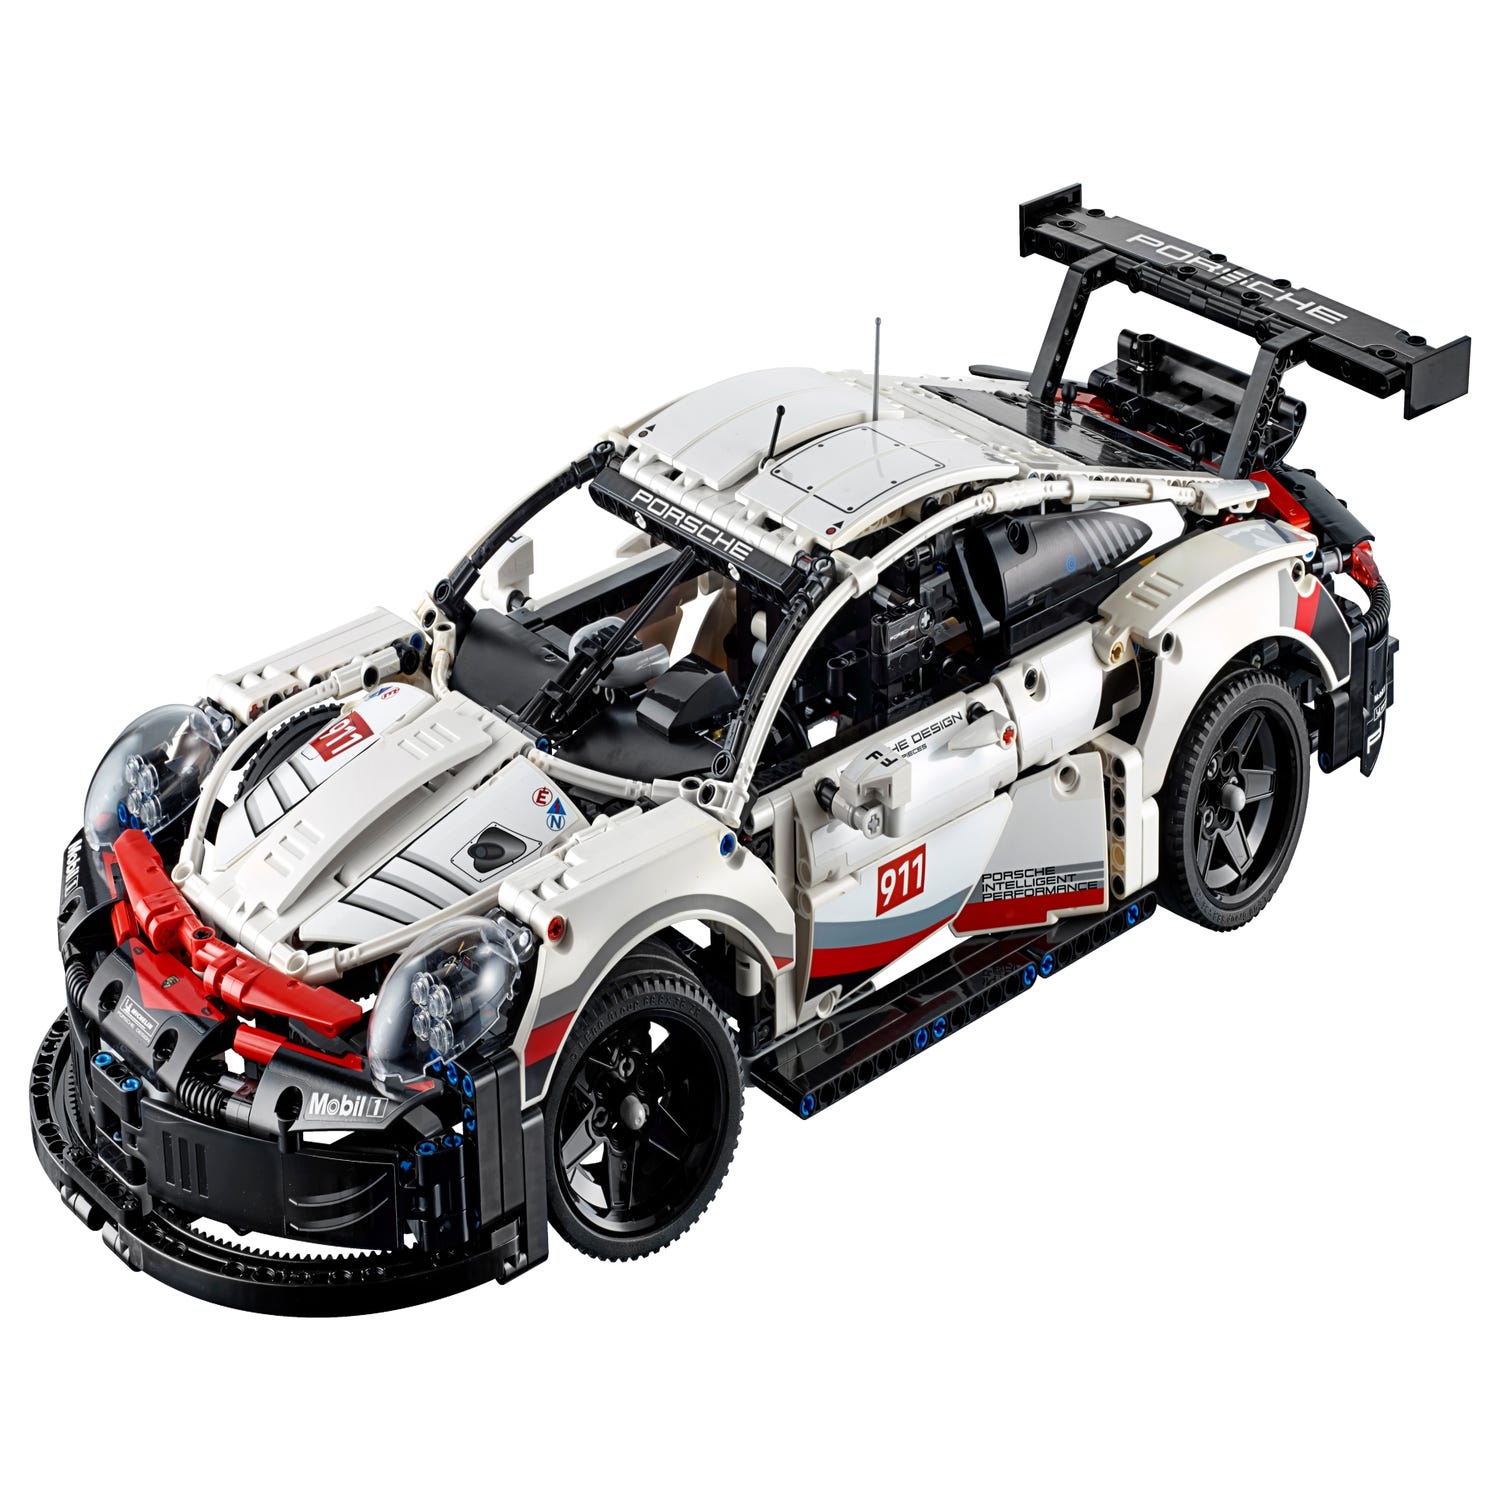 Vær modløs Portal helbrede Porsche 911 RSR 42096 | Technic™ | Buy online at the Official LEGO® Shop US